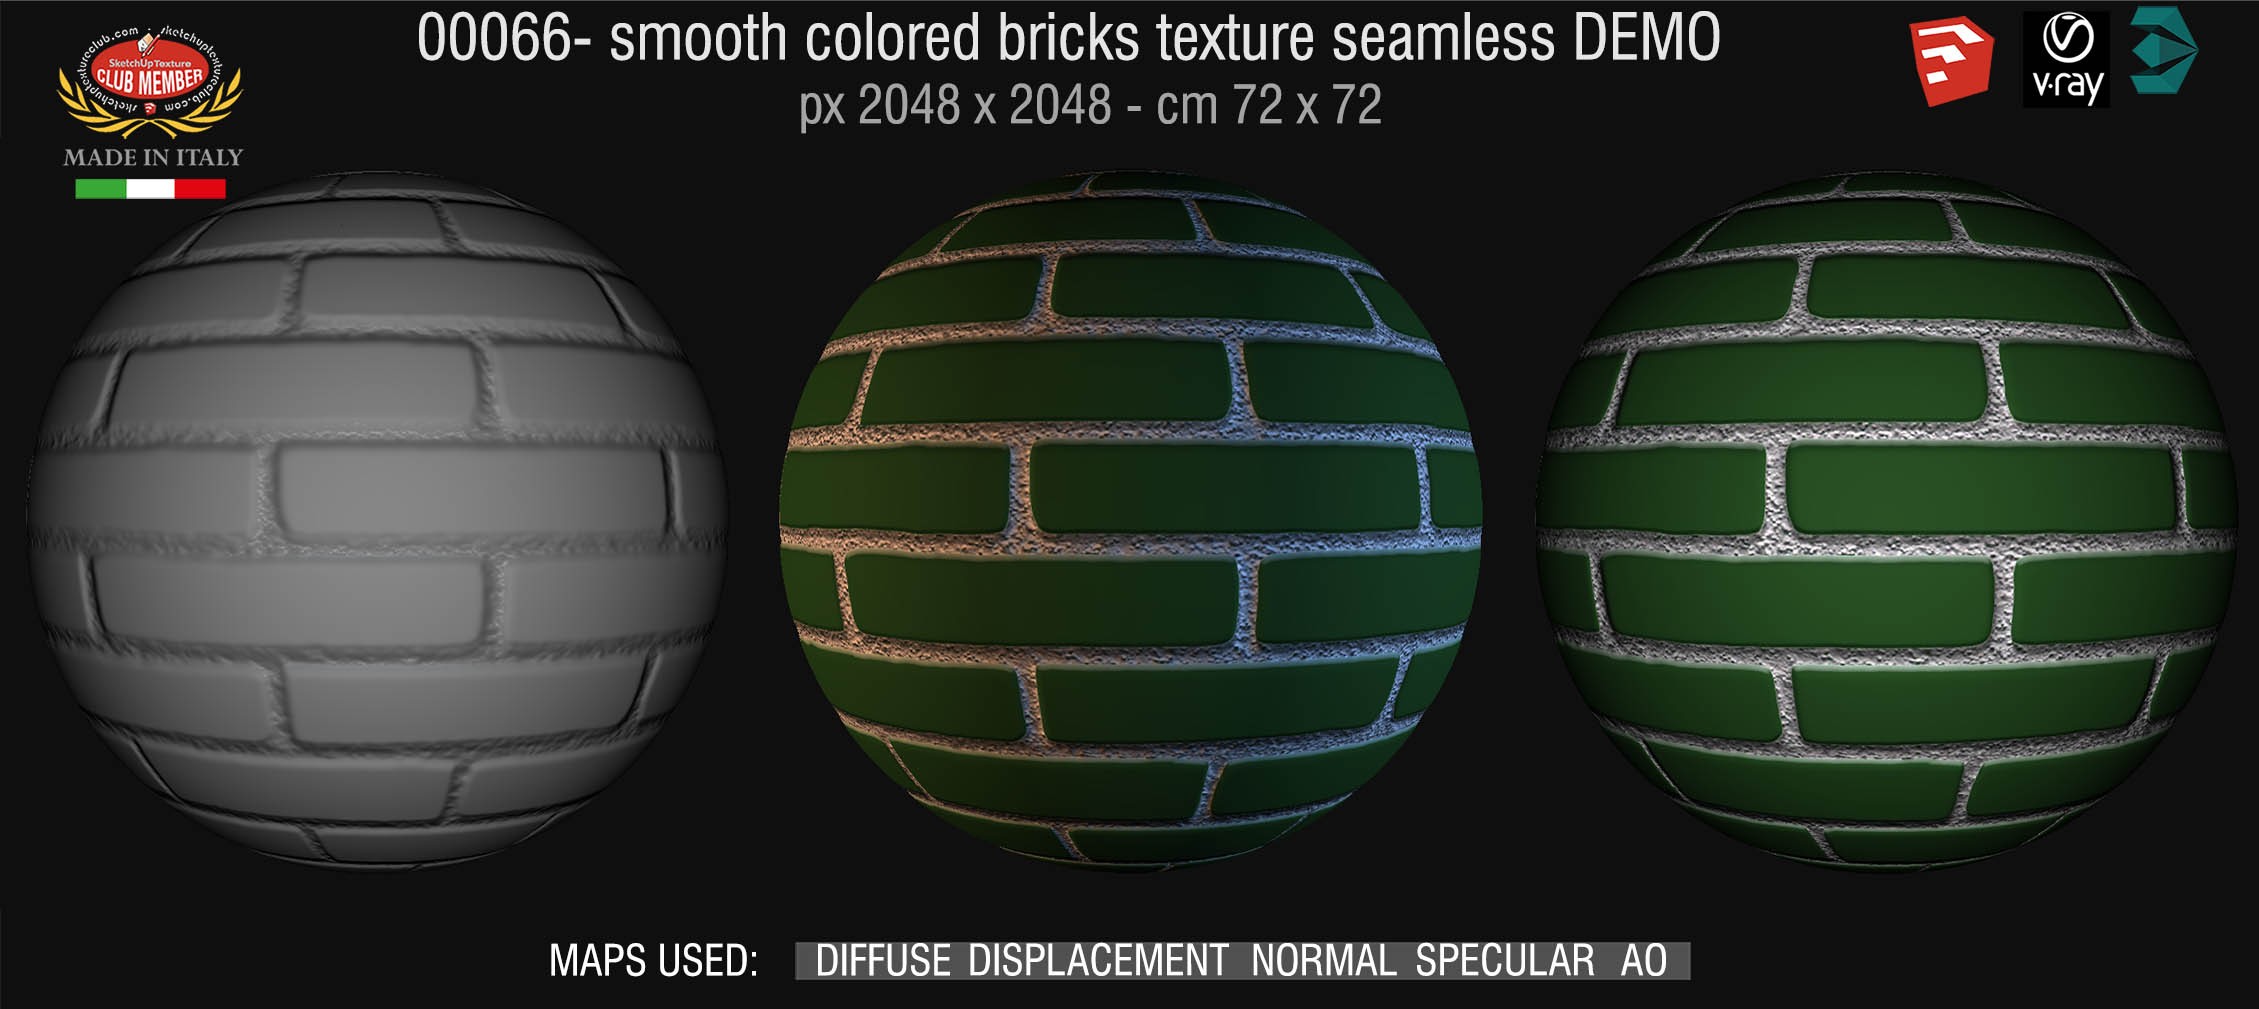 00066 smooth colored bricks texture seamless + maps DEMO